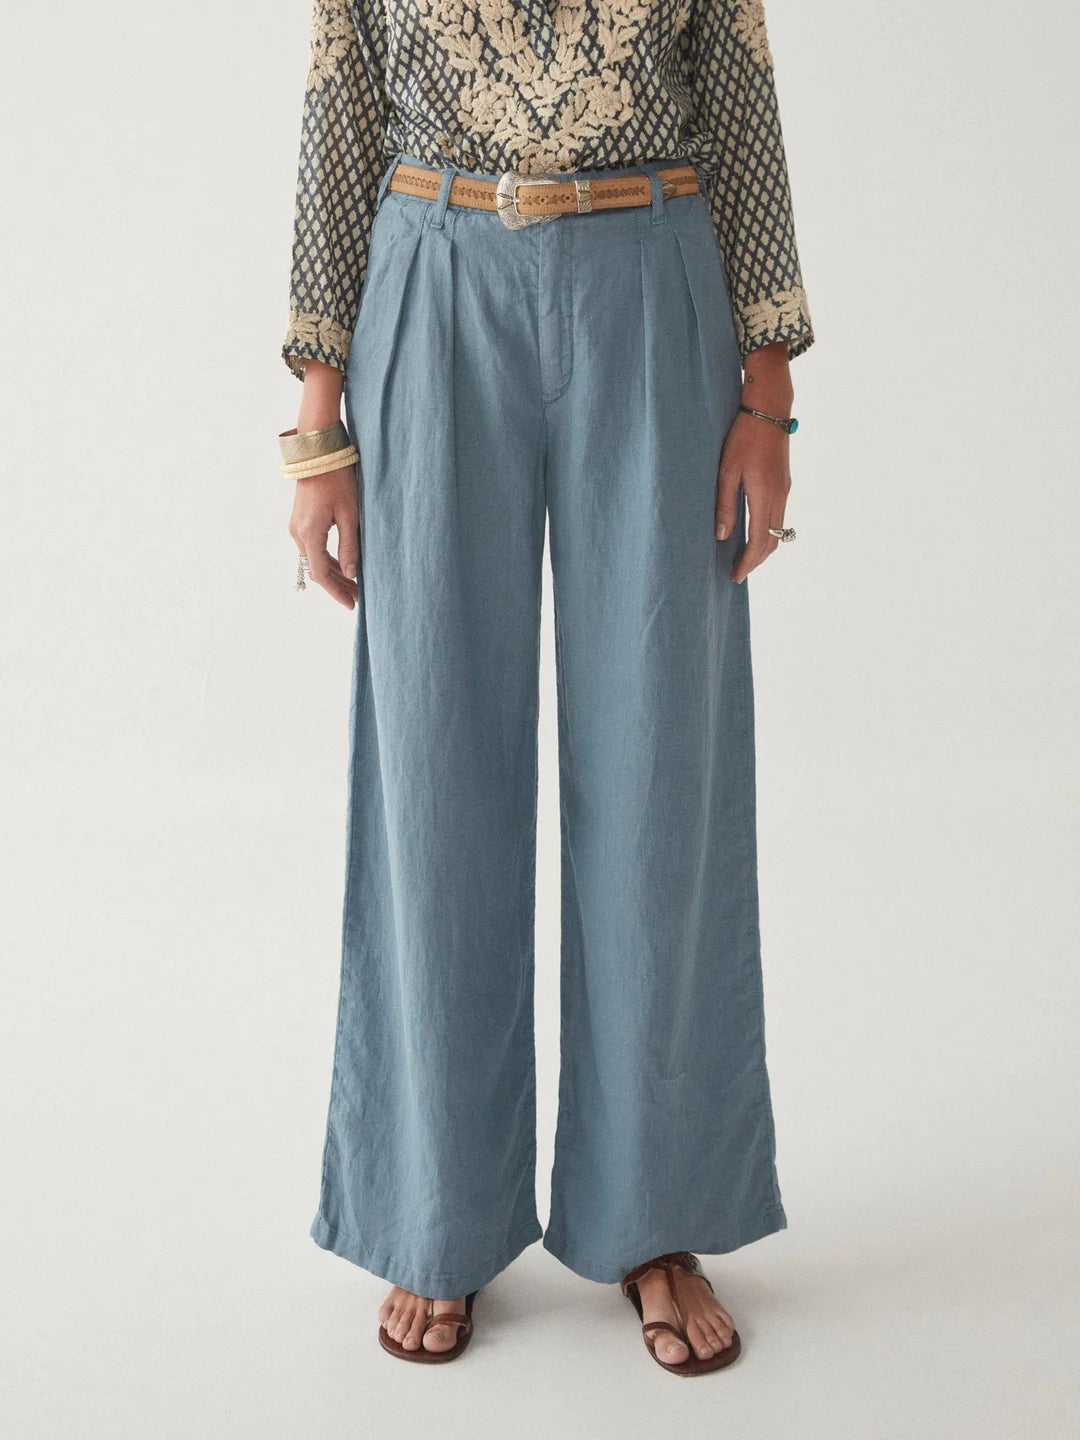 Model wears full length blue linen trousers